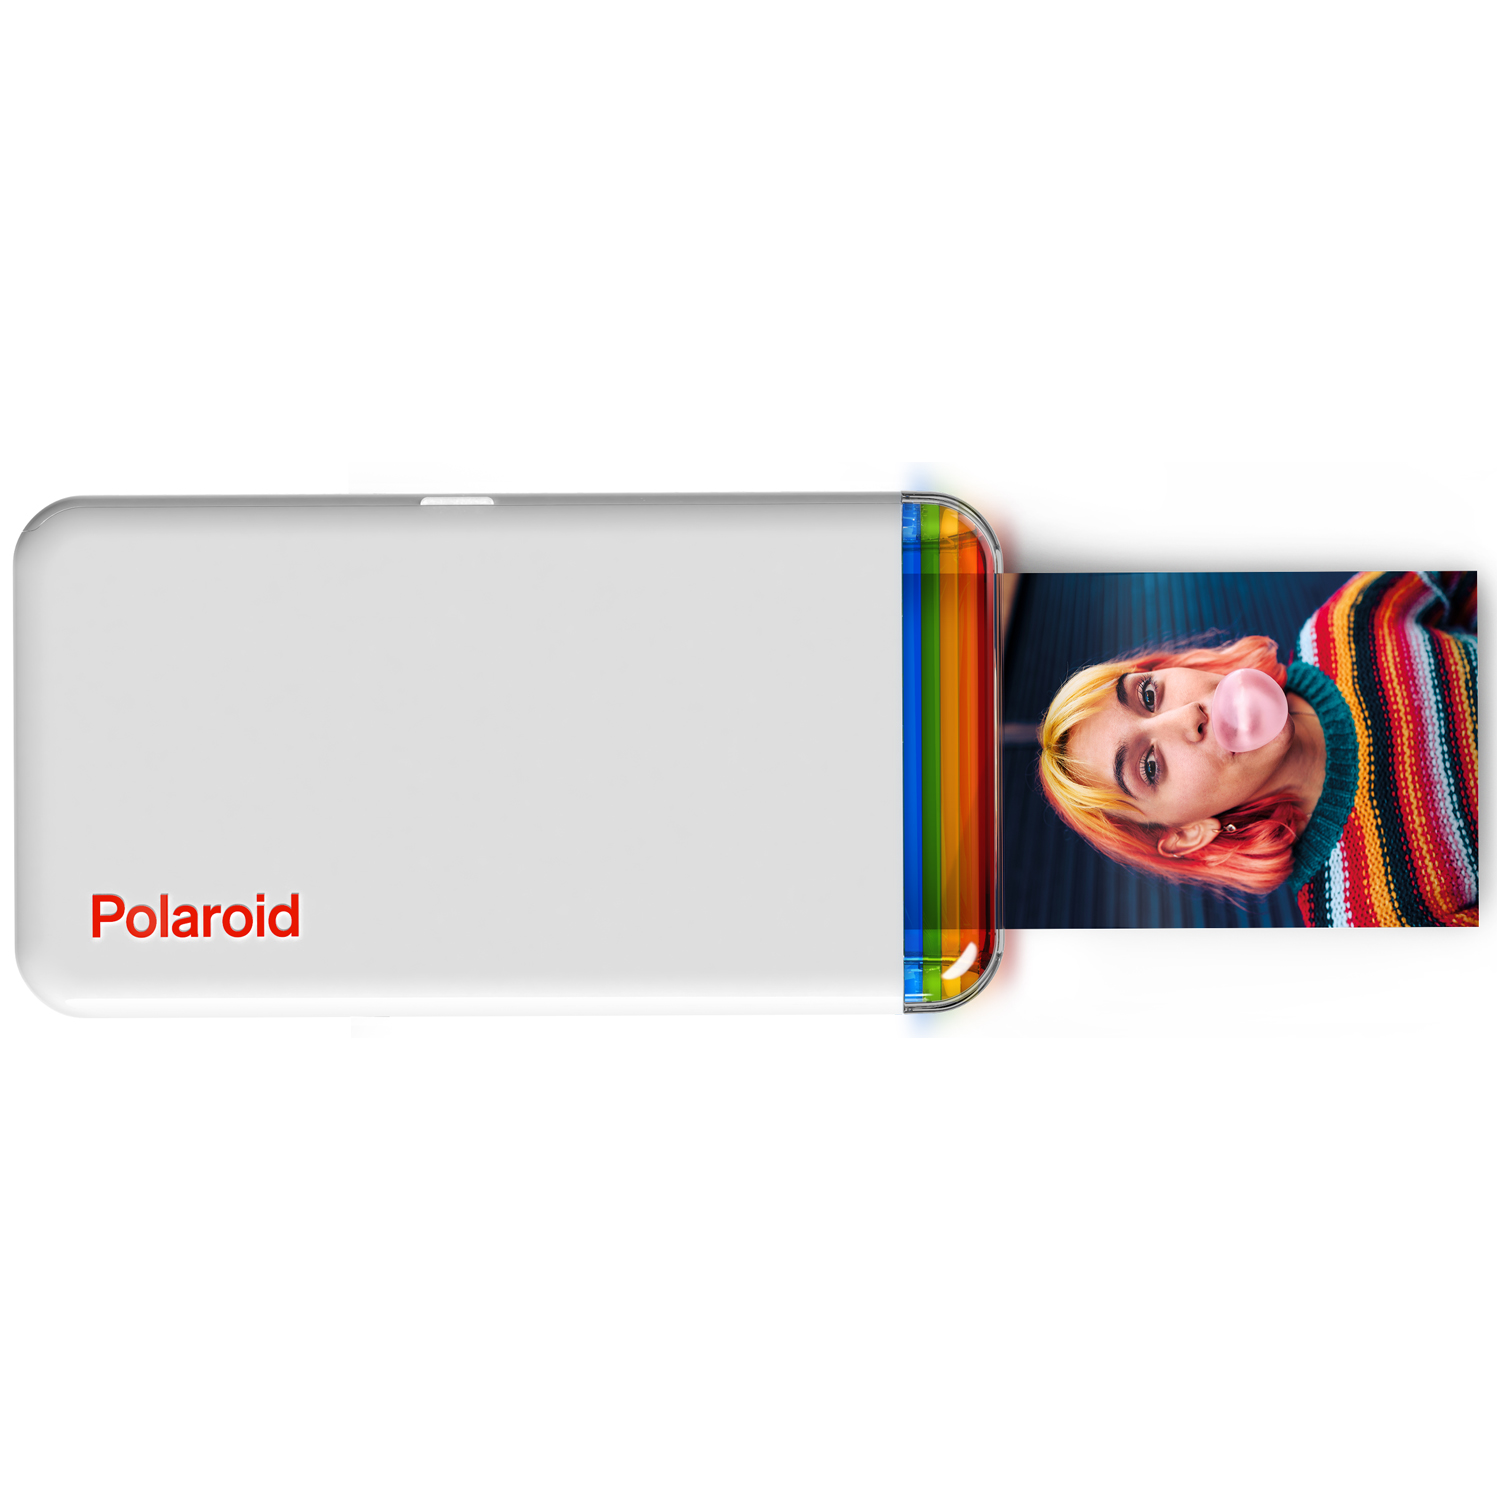 Polaroid HI PRINT 2×3 PAPER CARTRIDGE 20 SHEETS - Film photo -  multi-coloured/multicolore 